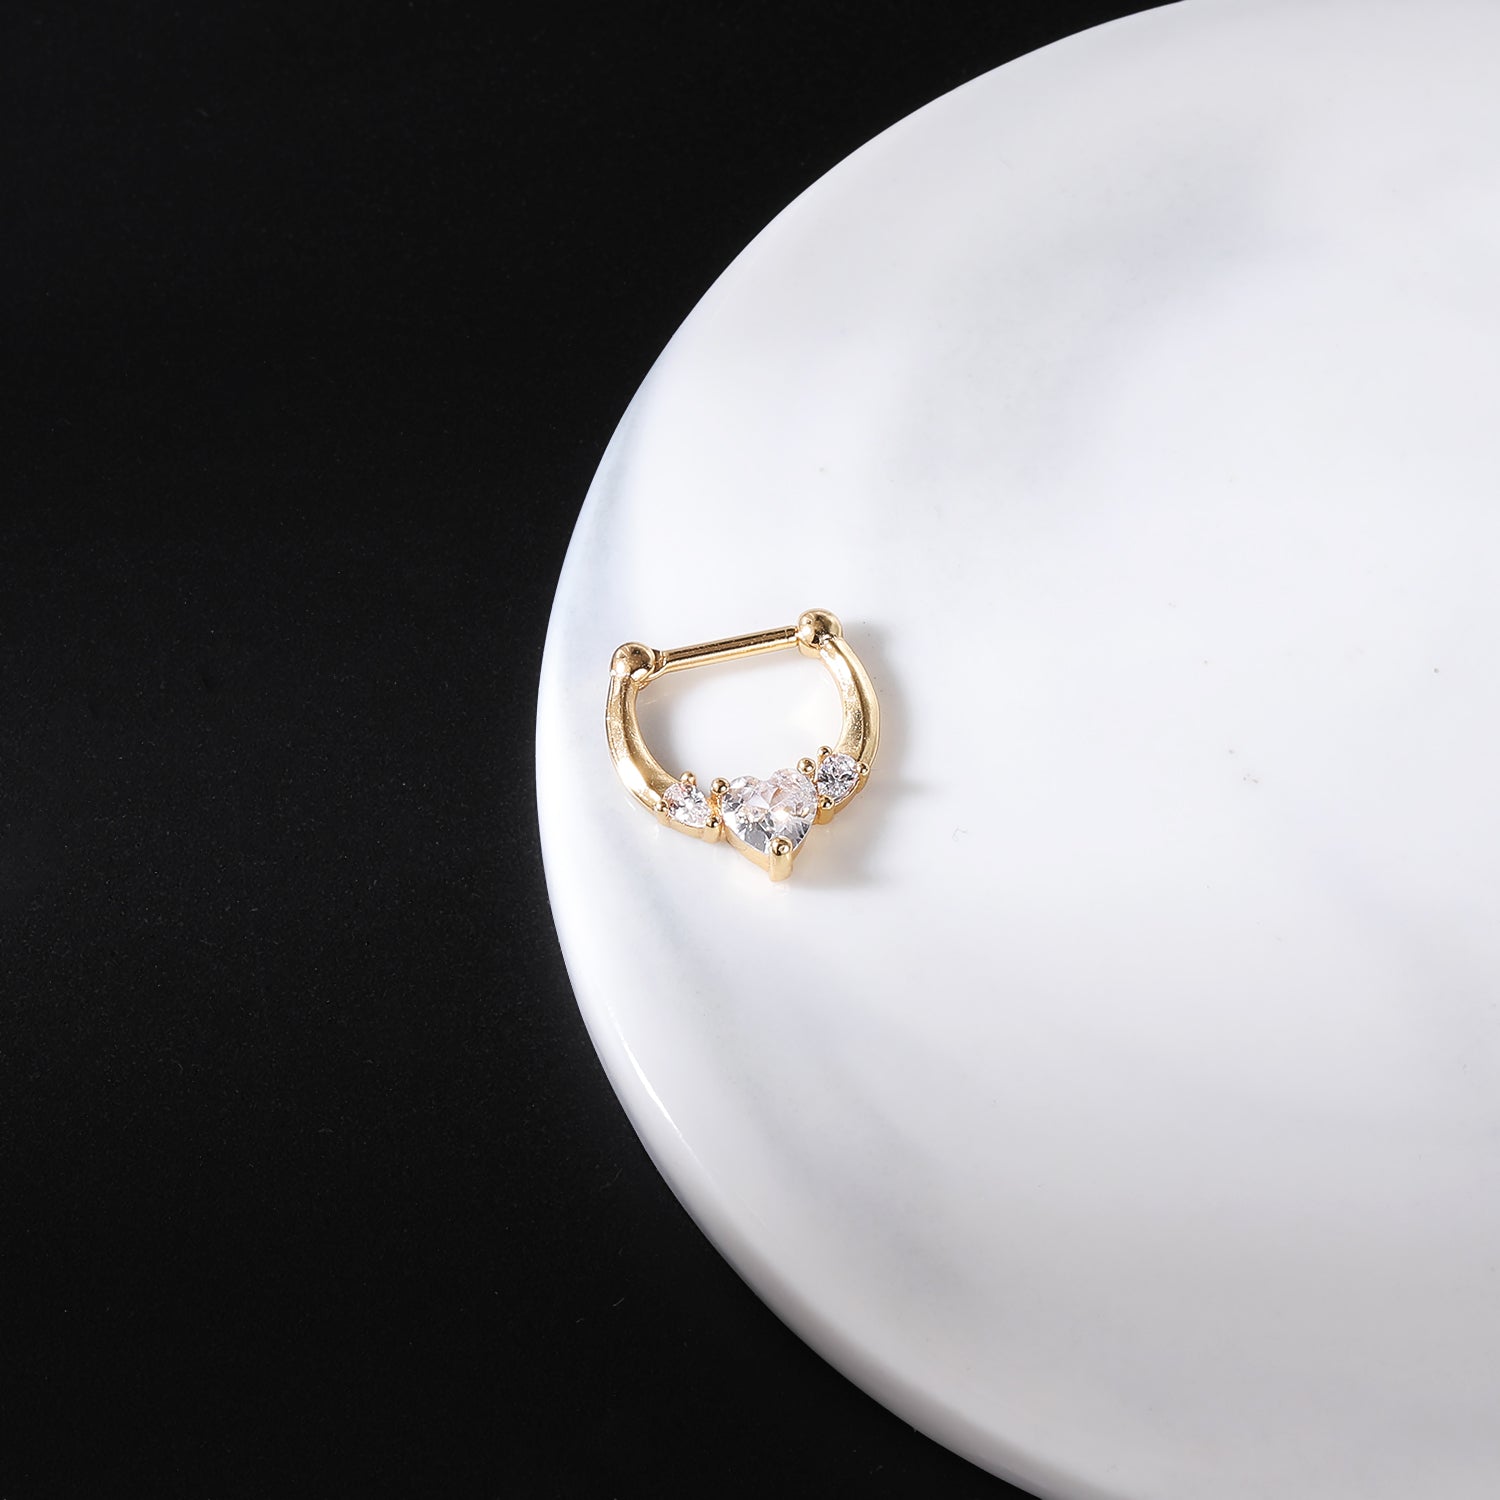 20g-heart-crystal-nose-septum-clicker-ring-gold-sliver-color-stainless-steel-helix-cartilage-piercing